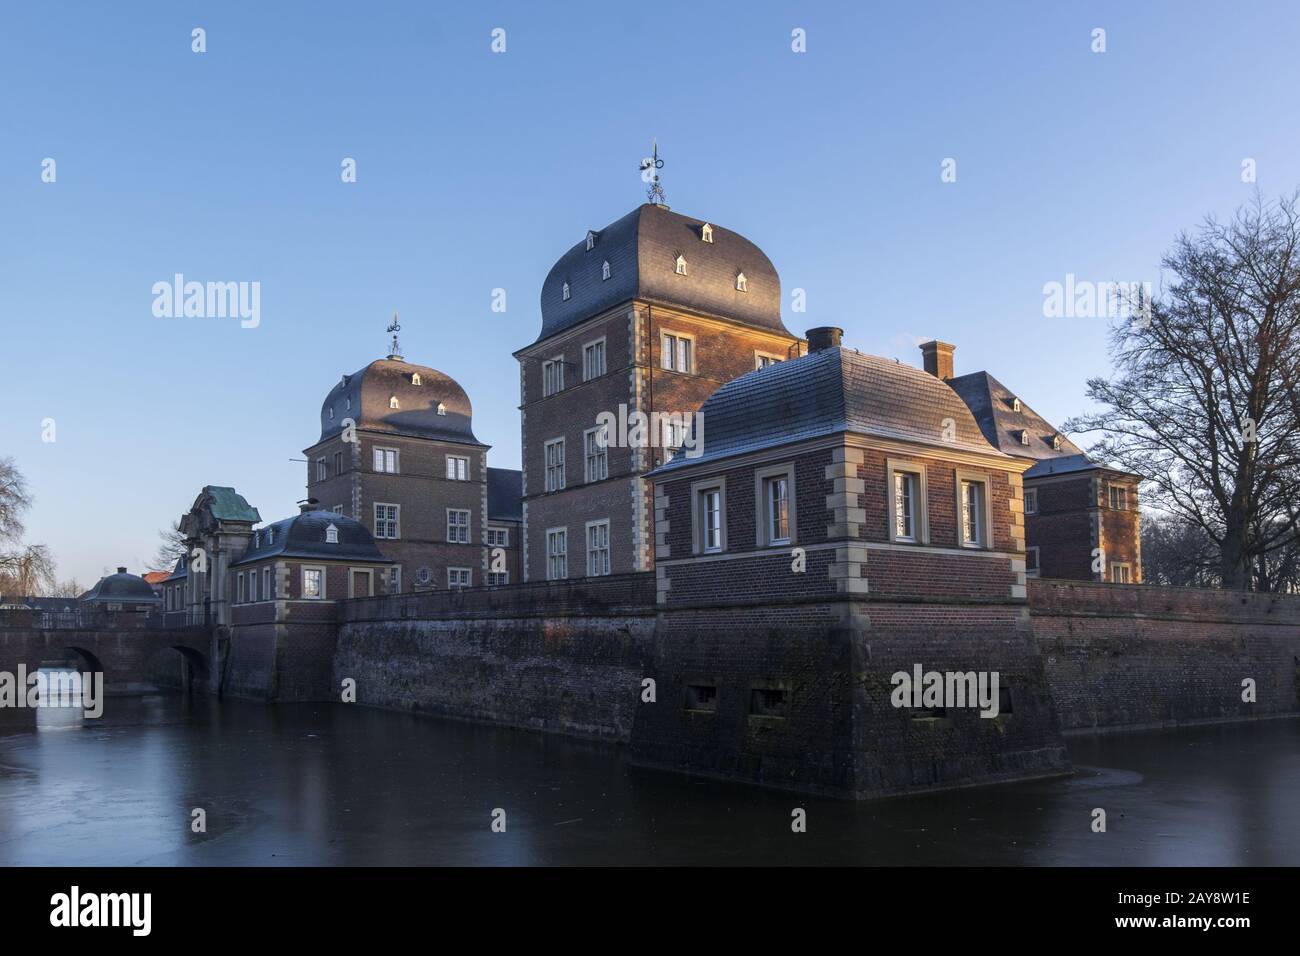 Baroque castle Ahaus in winter Stock Photo